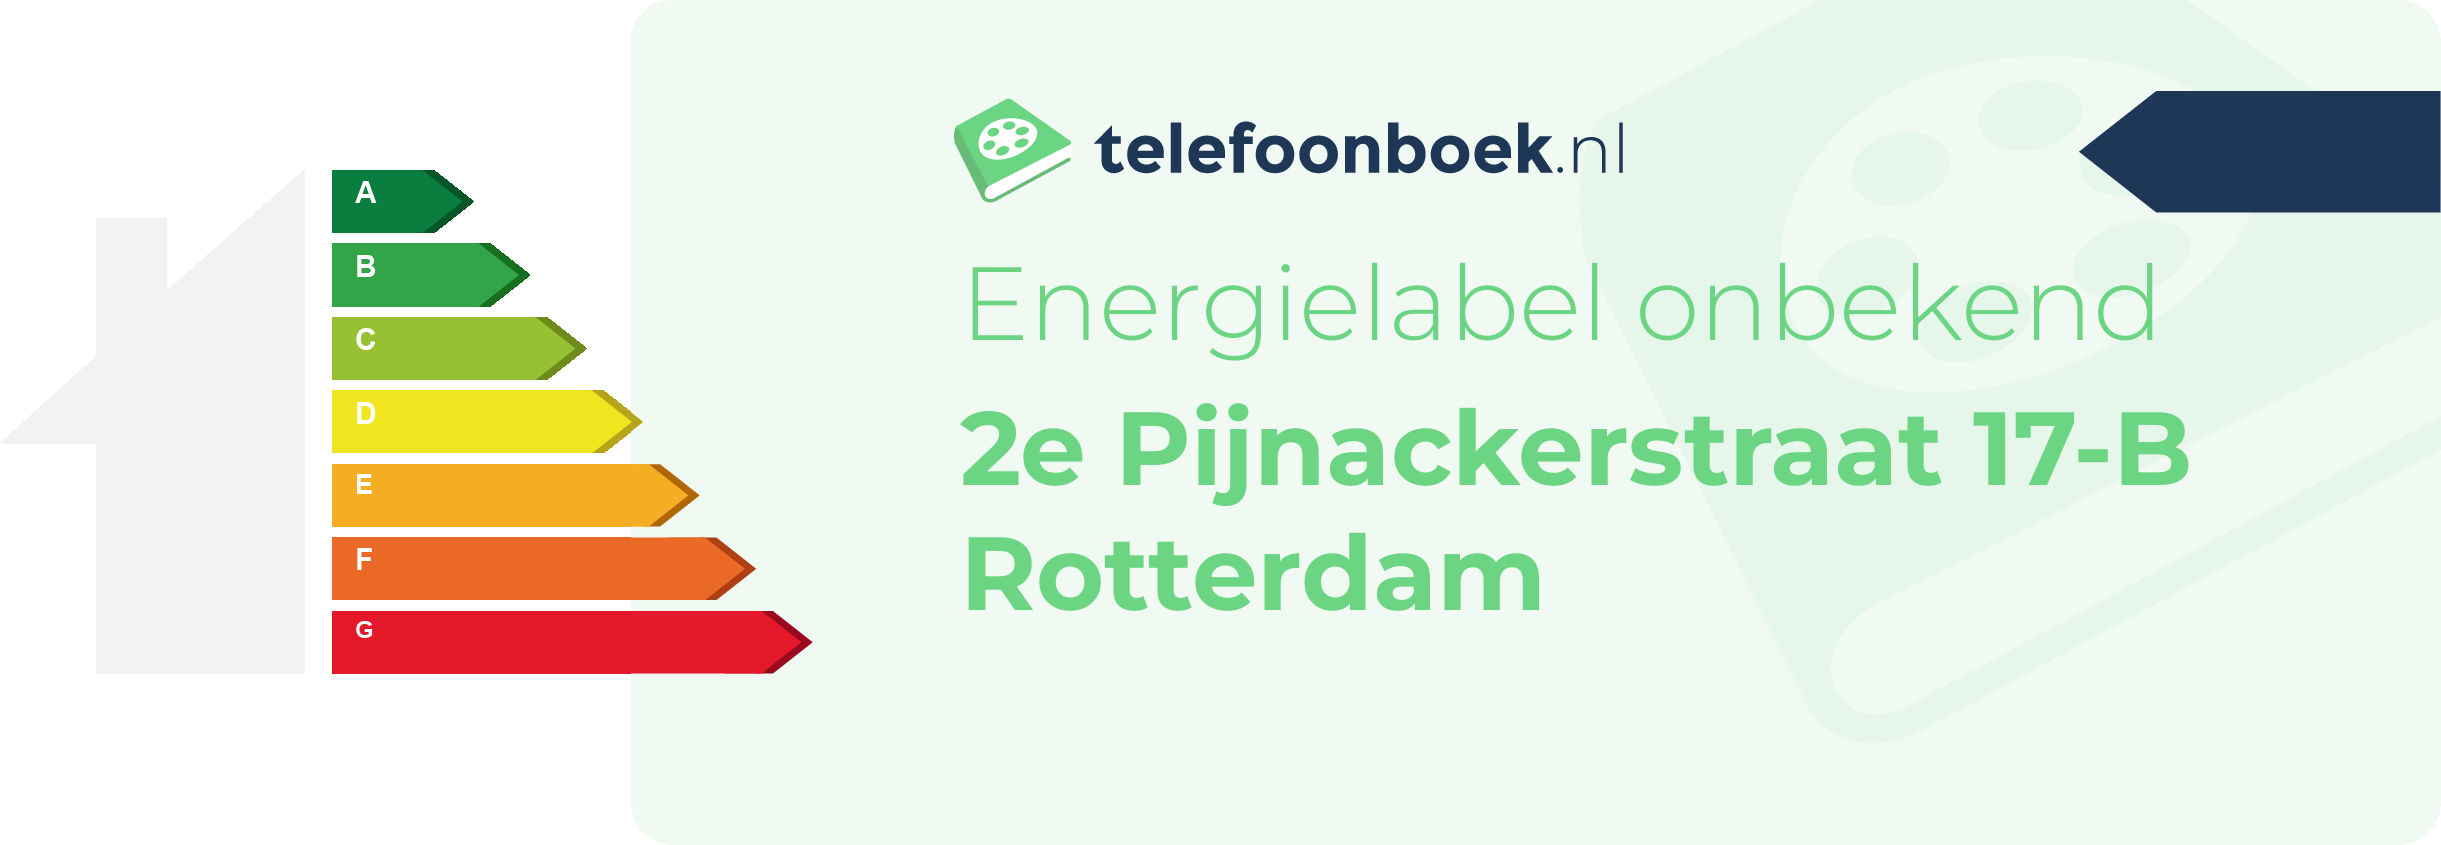 Energielabel 2e Pijnackerstraat 17-B Rotterdam